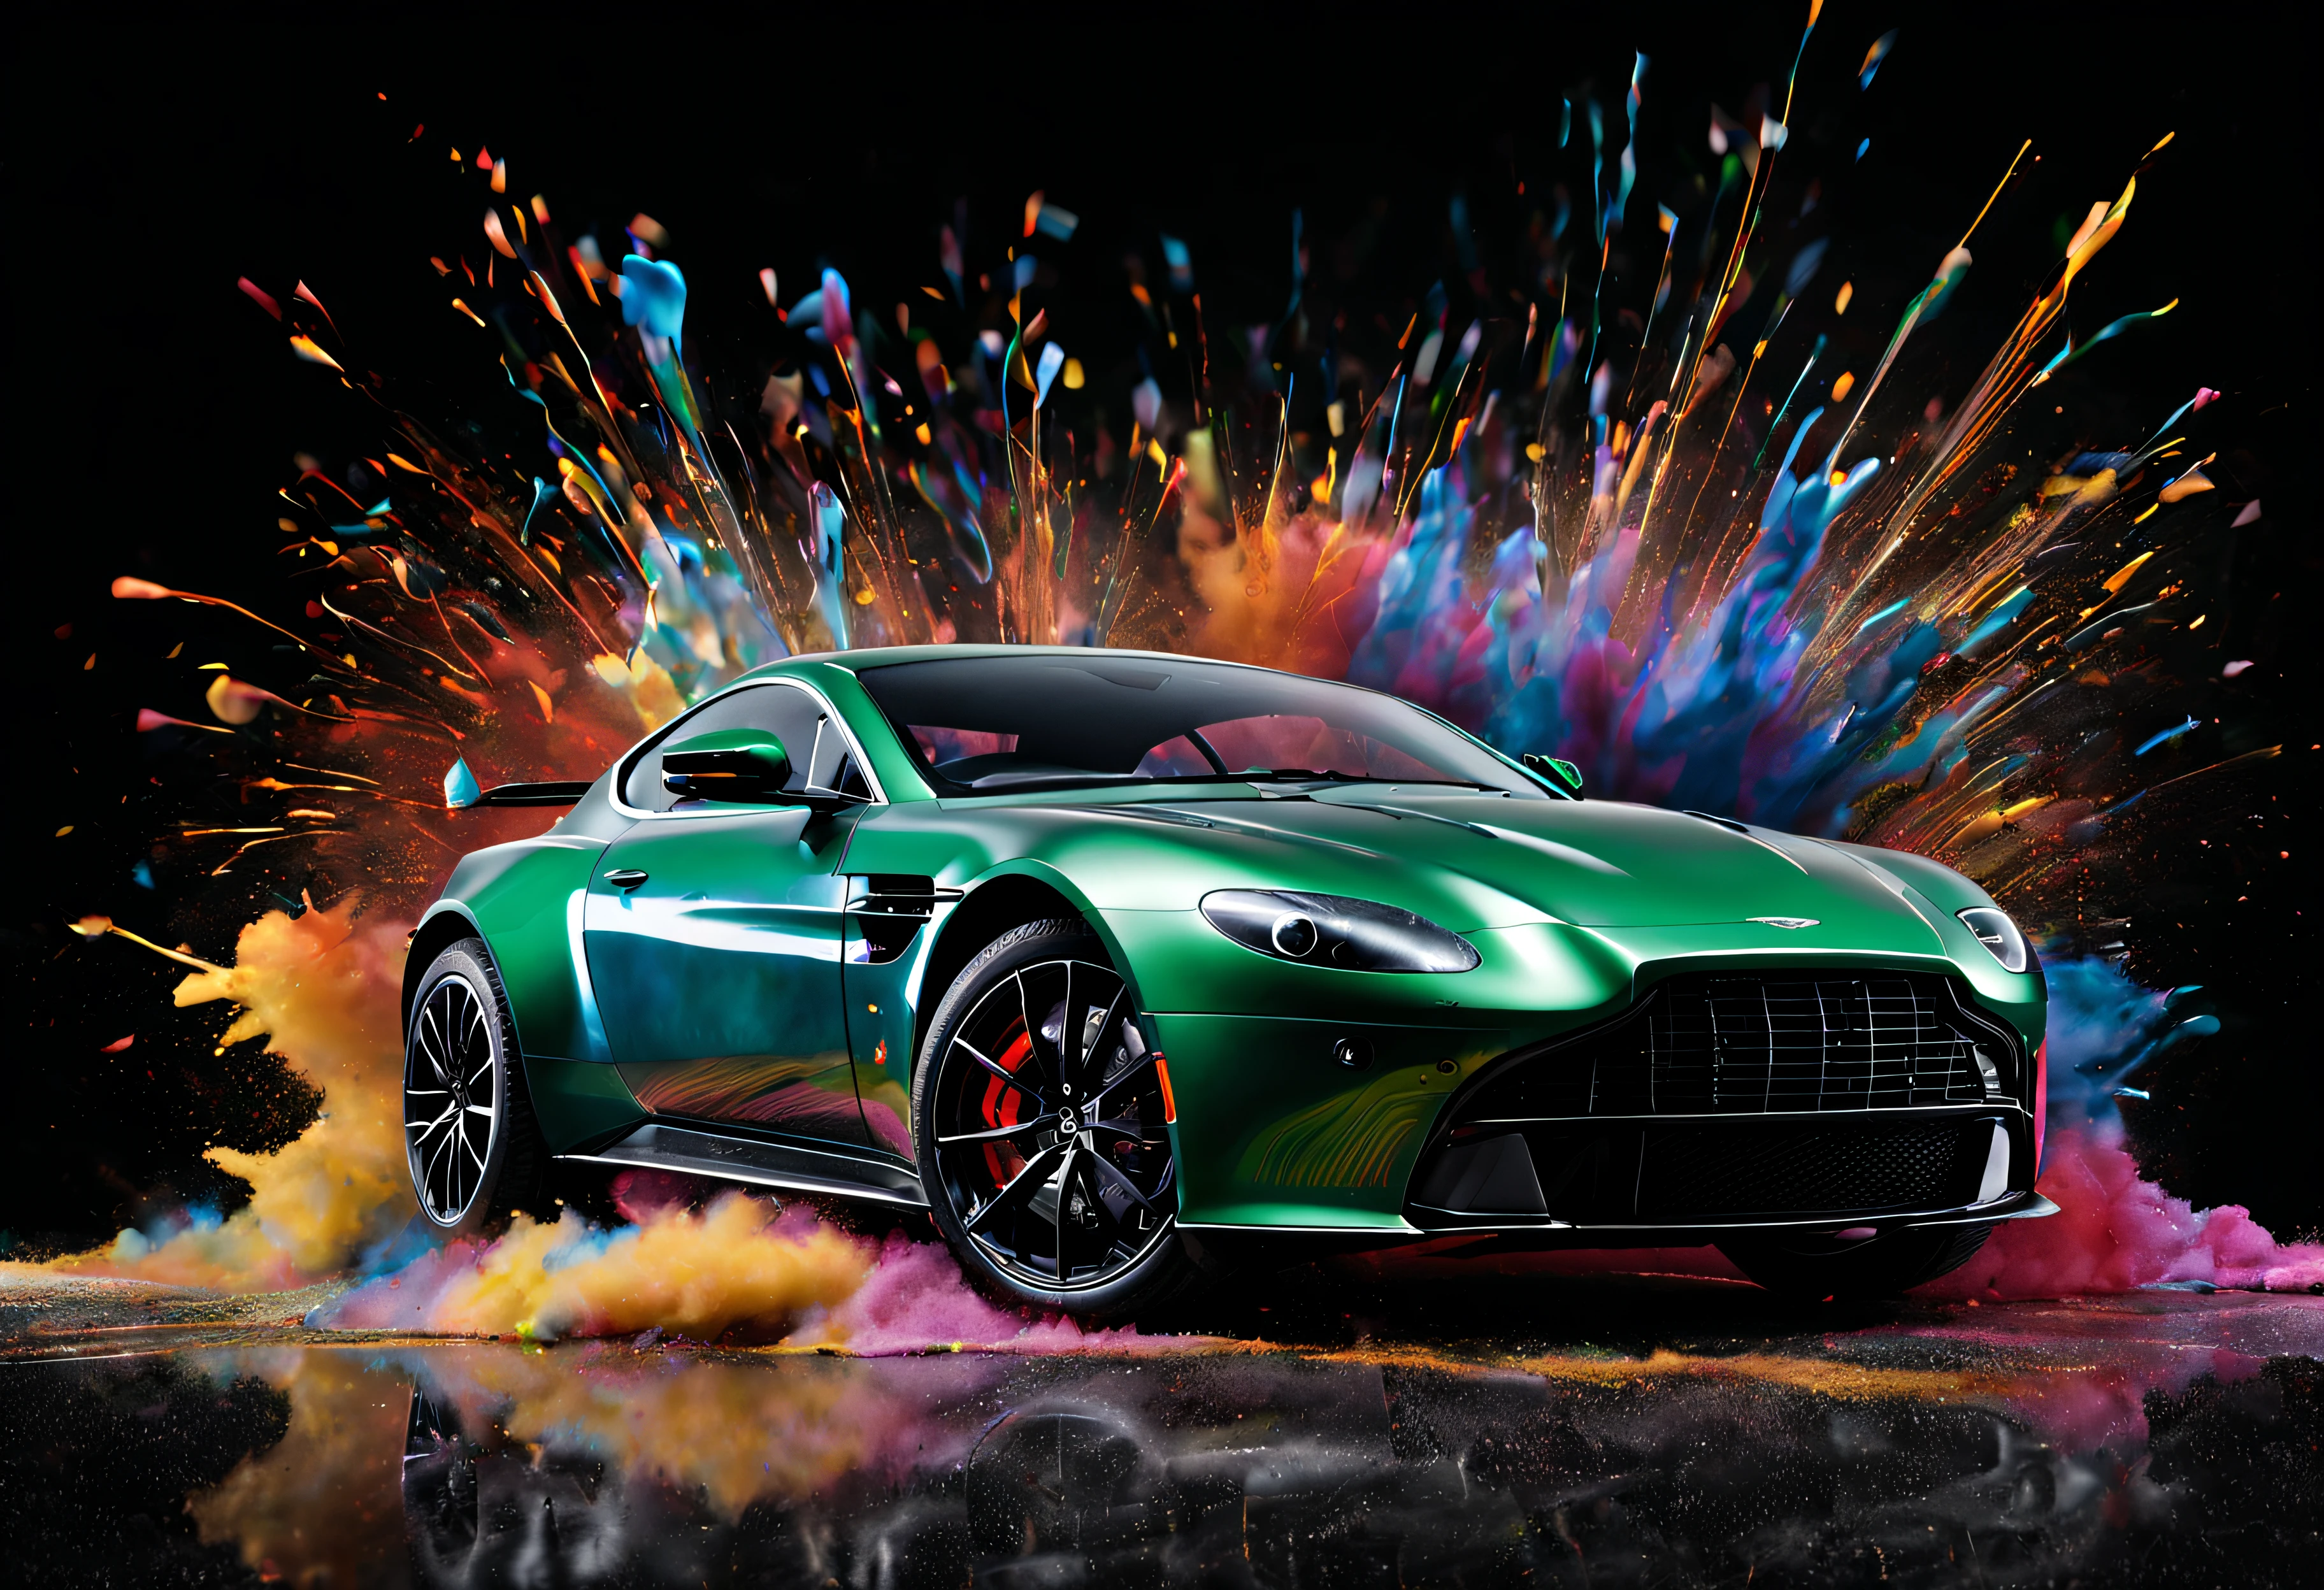 2023 Aston Martin V8 Vantage, Studio background, Paint exploding in the background